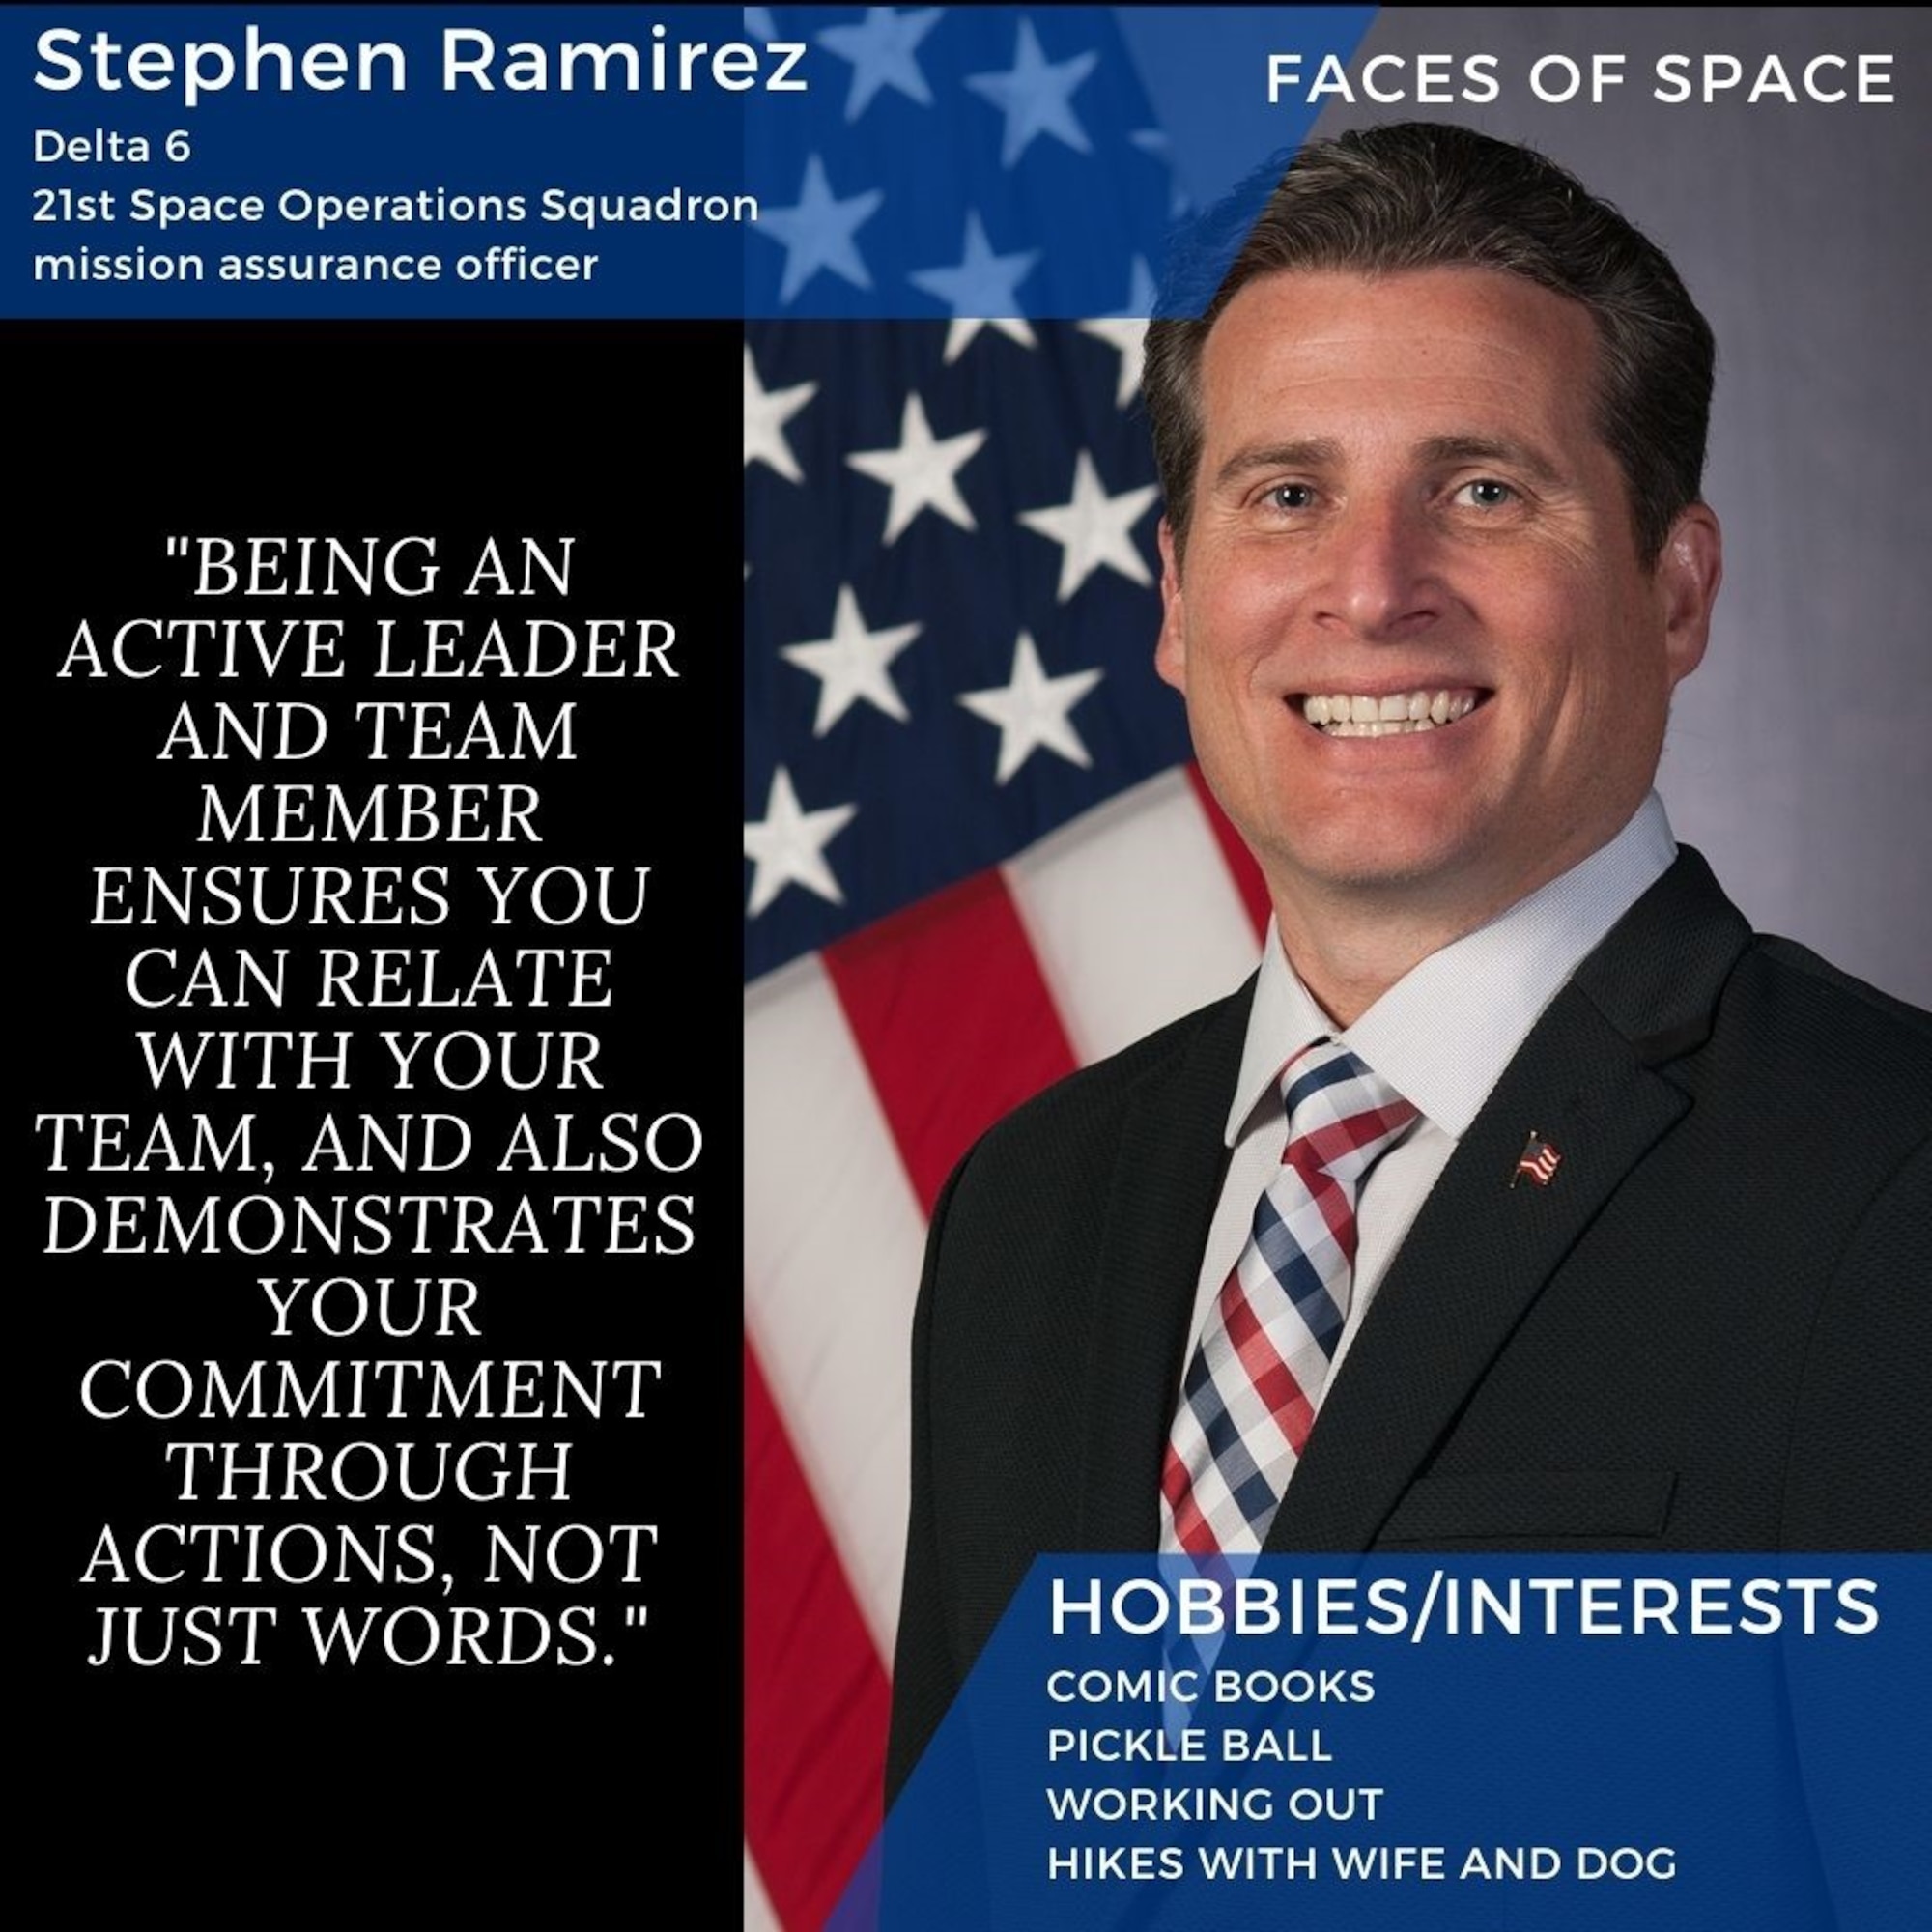 Faces of Space: Stephen Ramirez